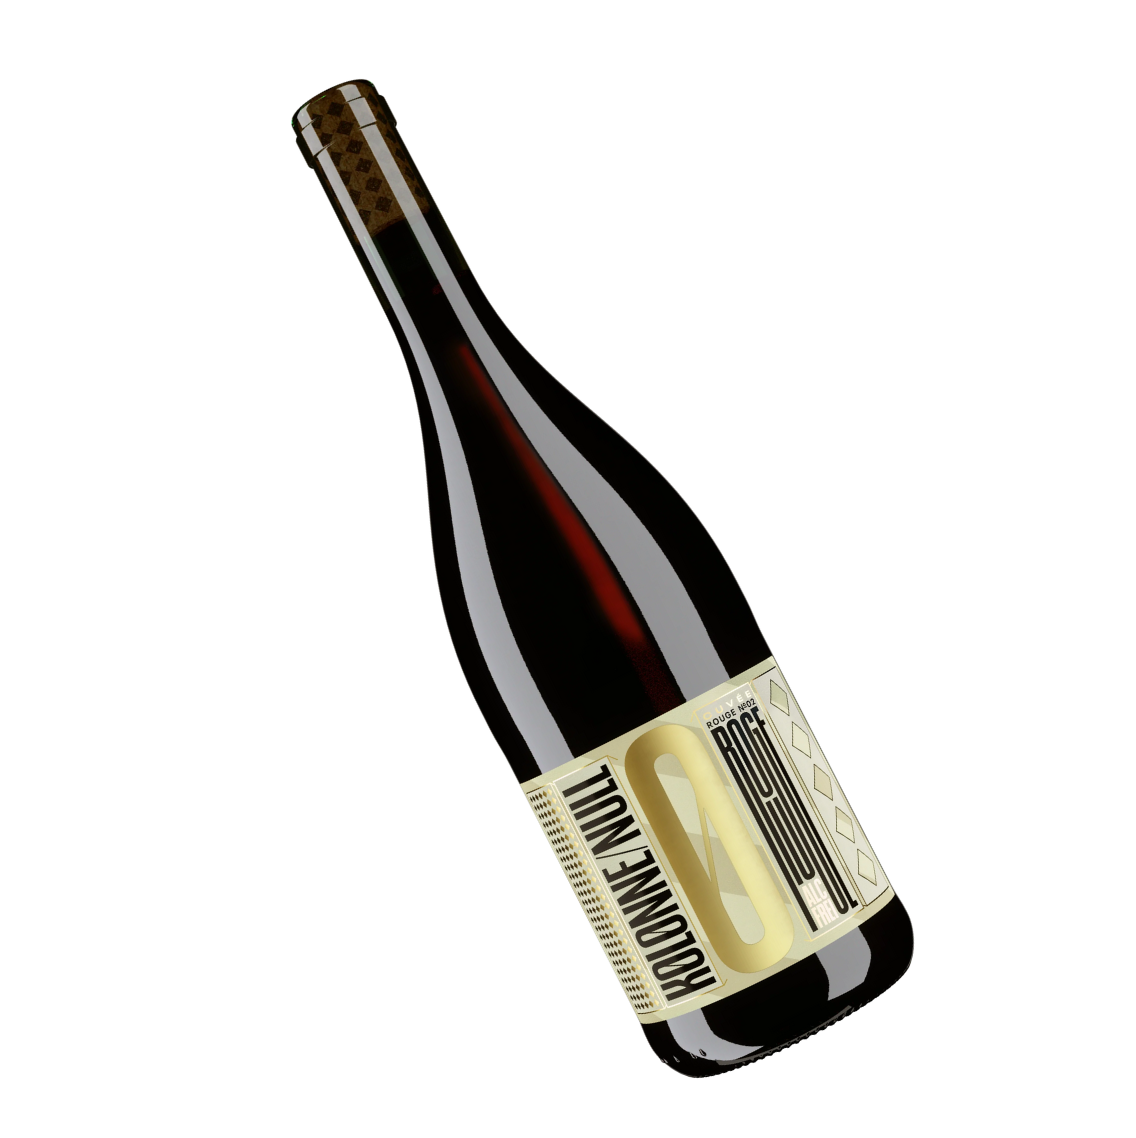 Kolonne Null Cuvée No. 02 Edition Mas Que Vinos rouge, schuin in beeld.